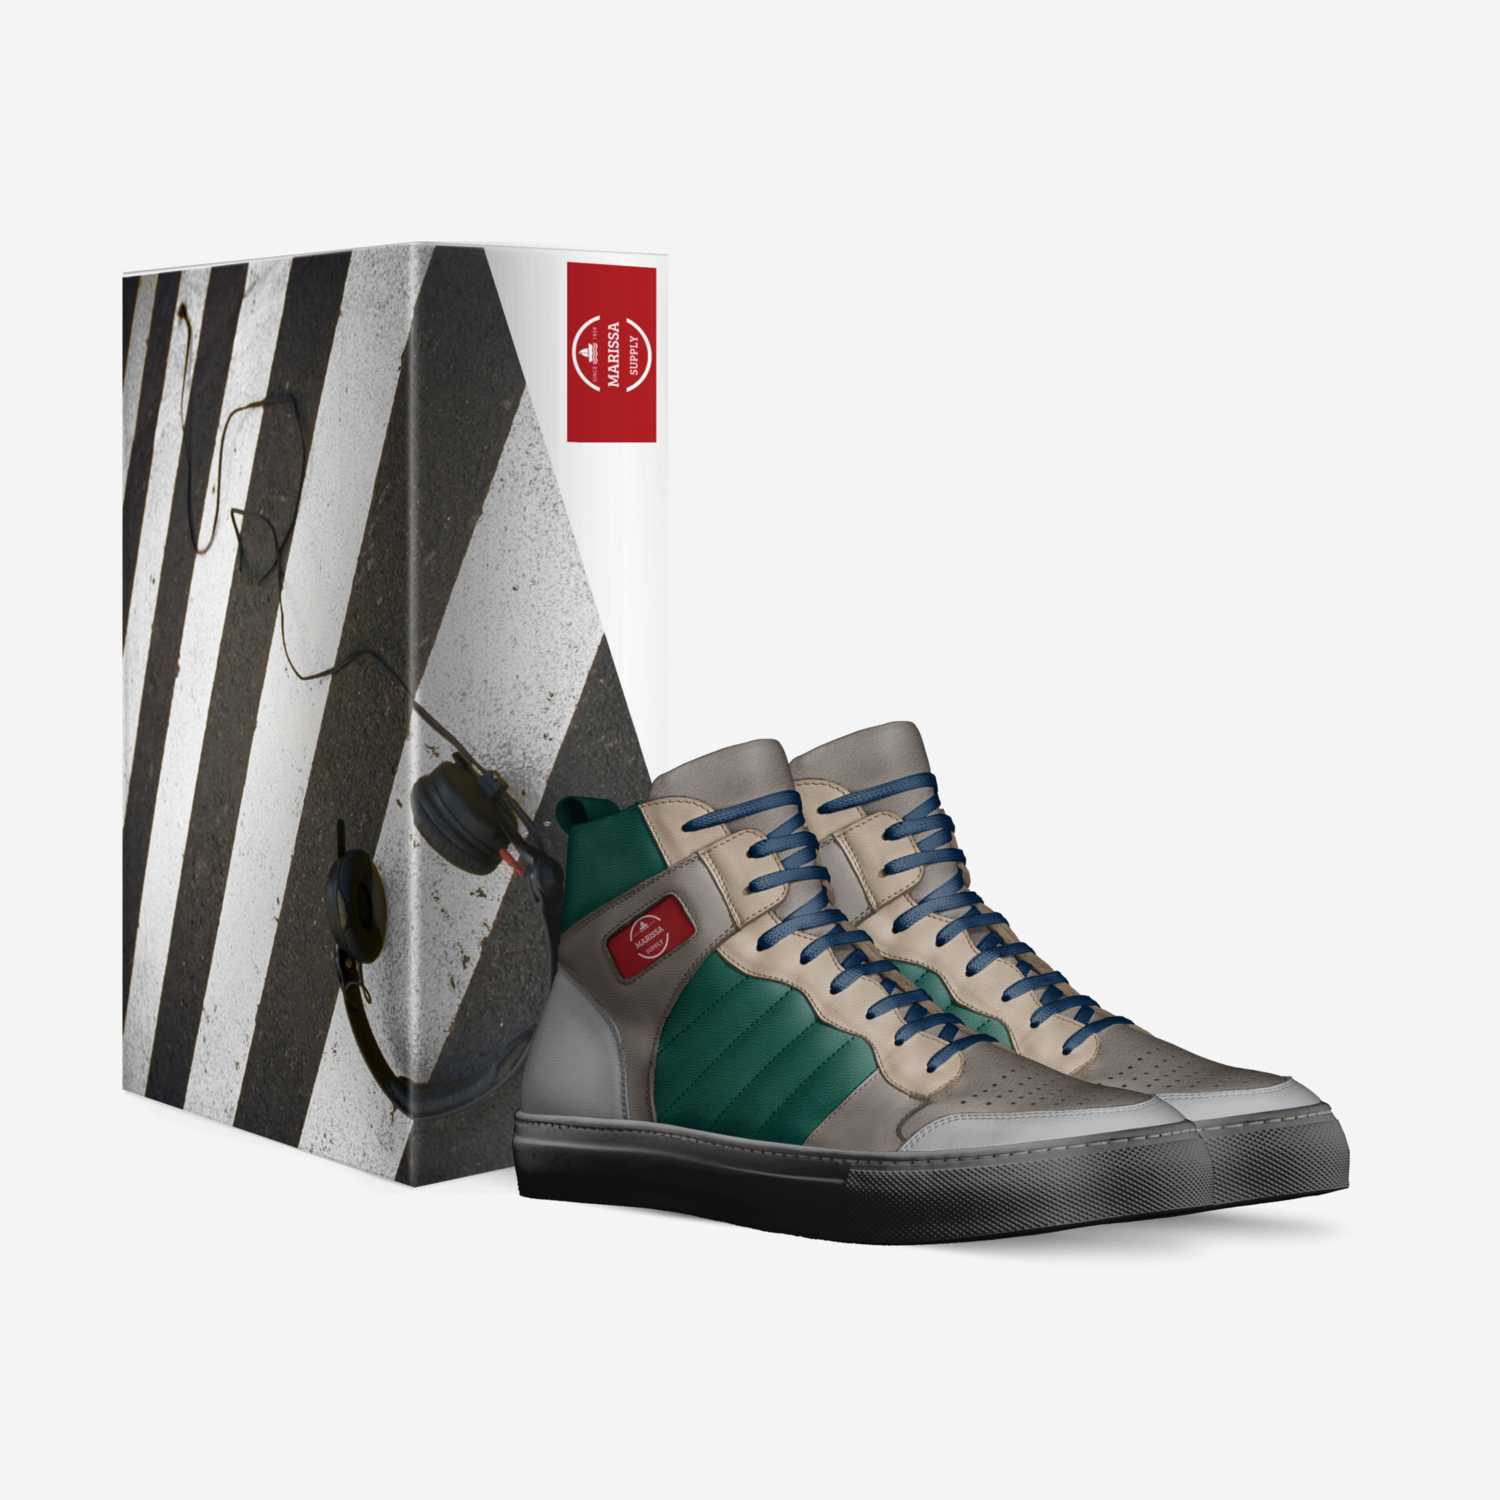 Marissa custom made in Italy shoes by Dokata Briant | Box view